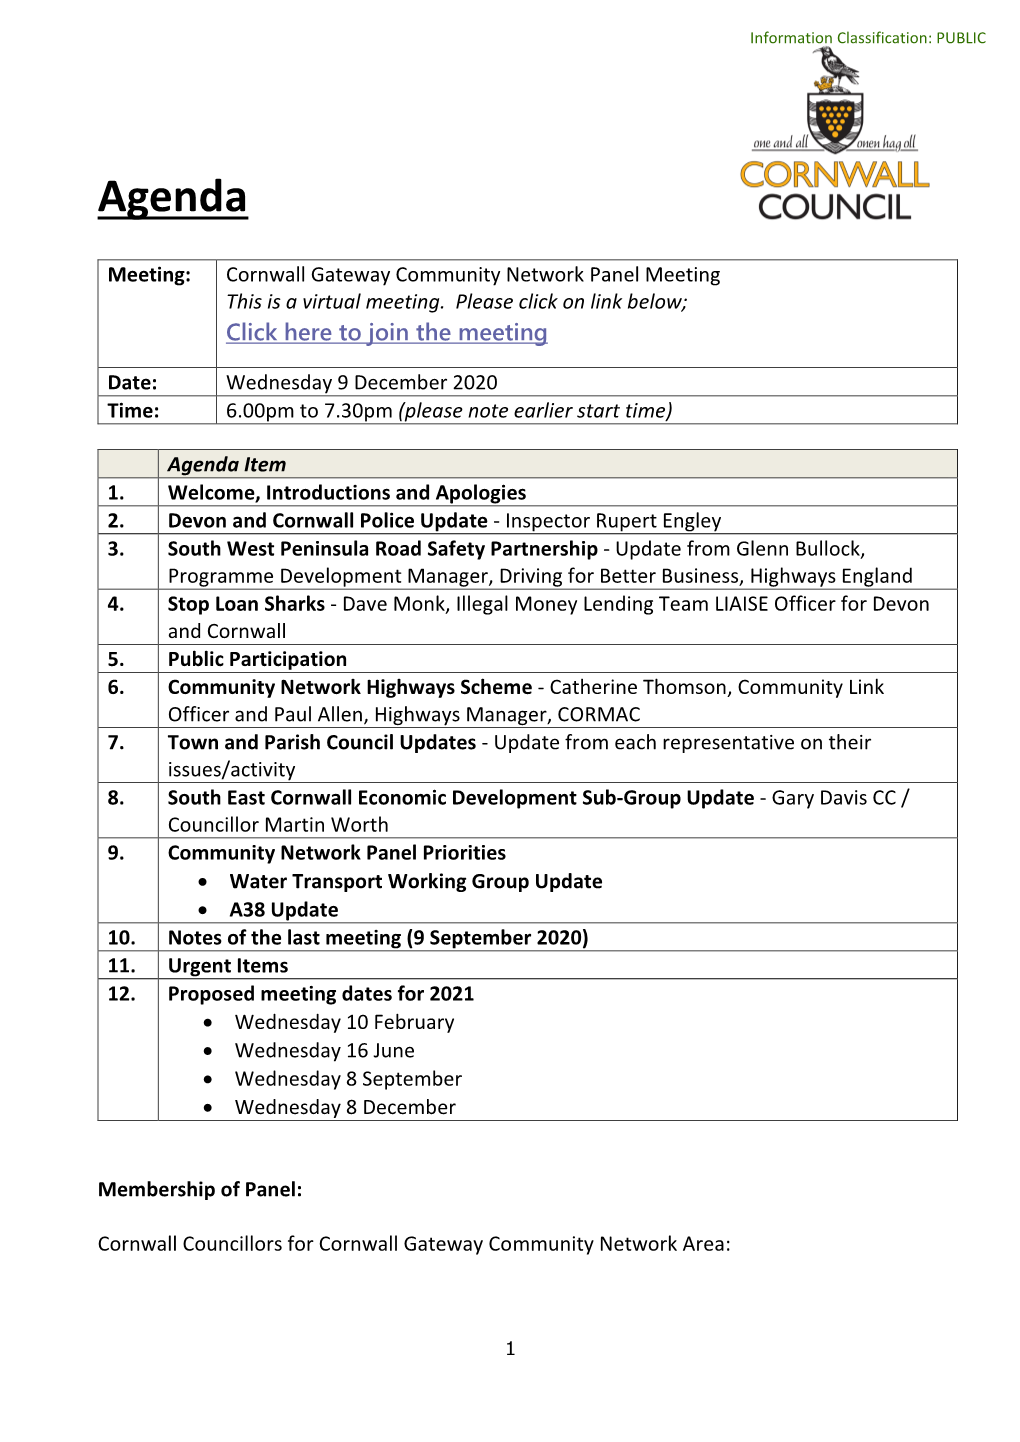 Agenda for Cornwall Gateway Community Network Meeting 091220